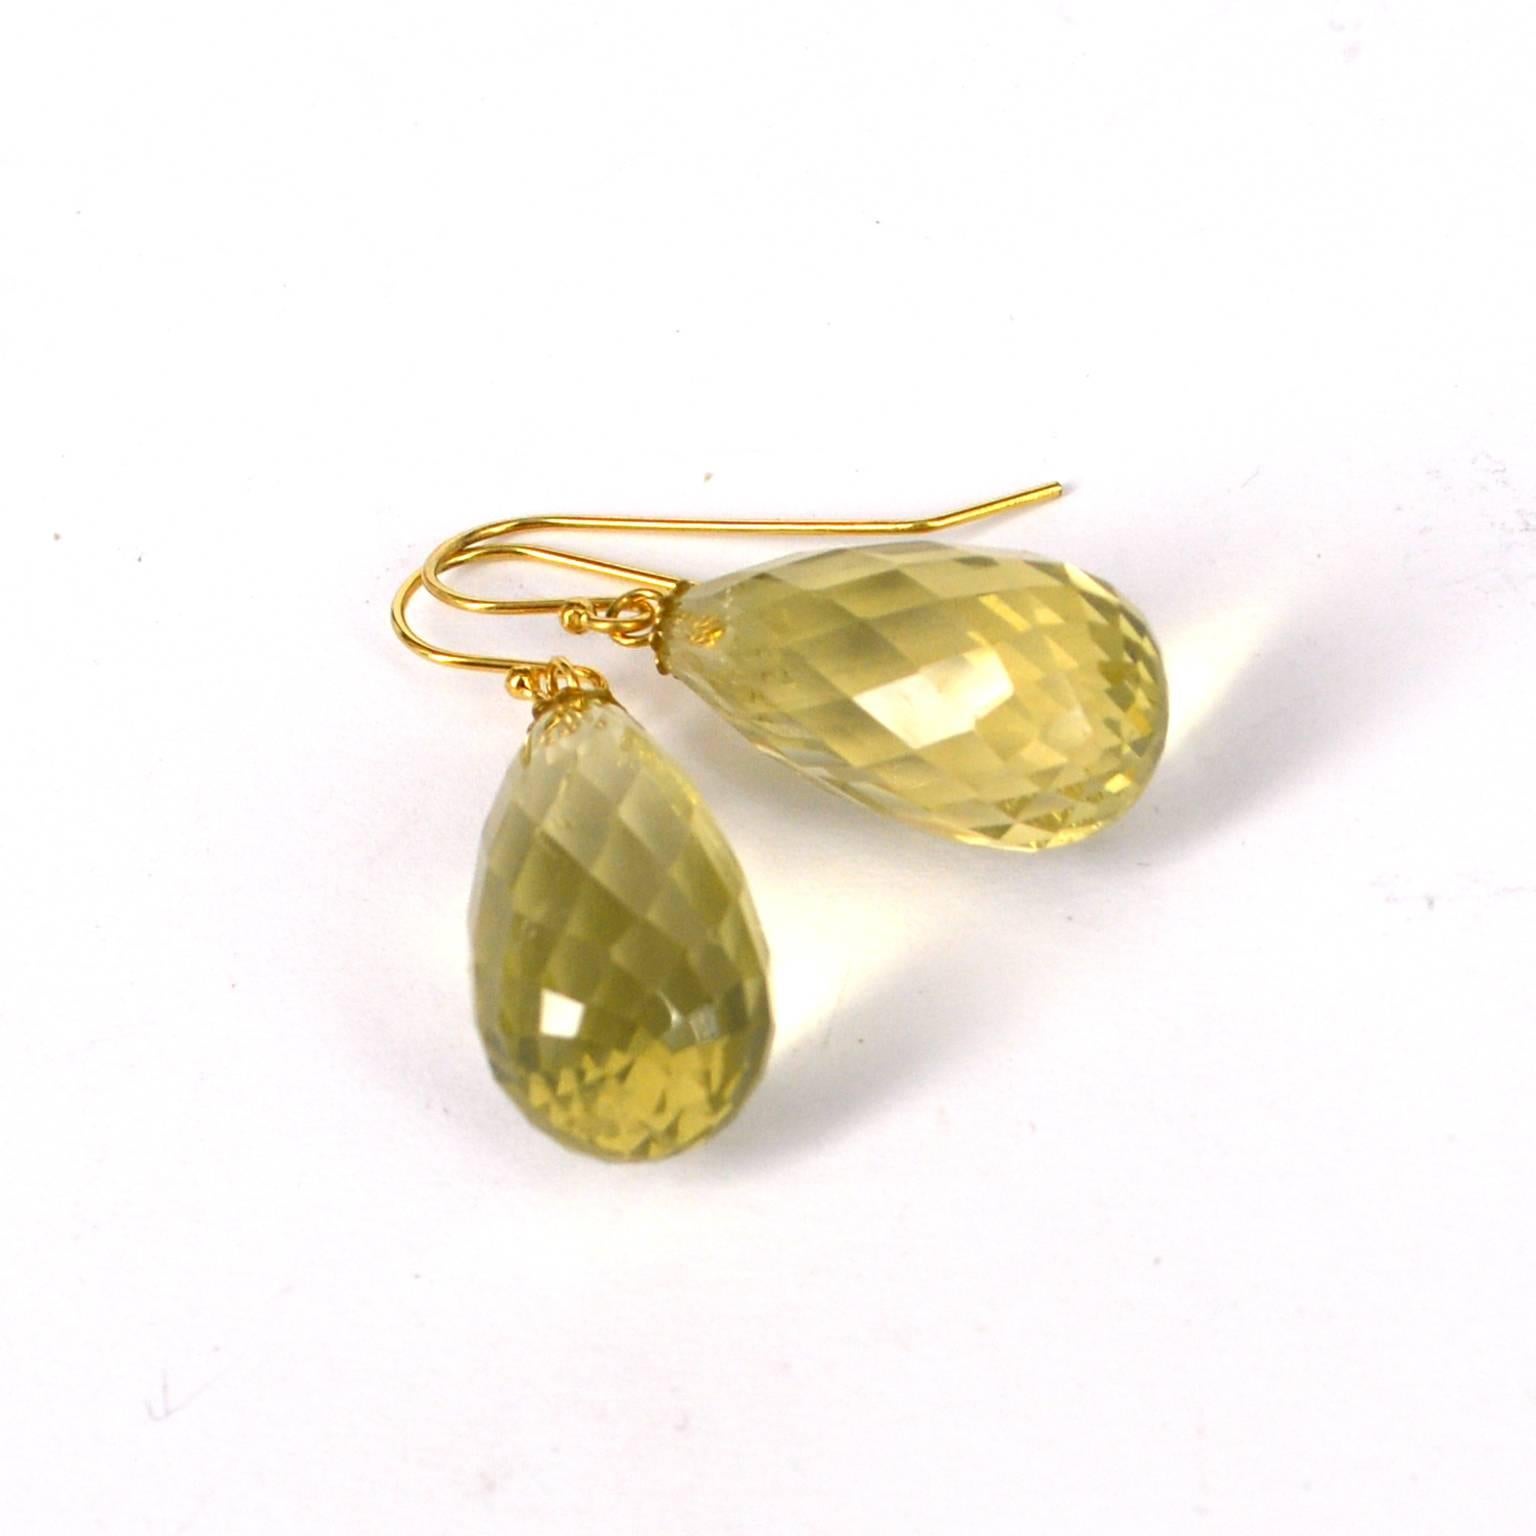 Faceted tear drop 22x11mm Lemon Quartz earring with 14k gold filled sheppard hooks.
total length of earring 35mm